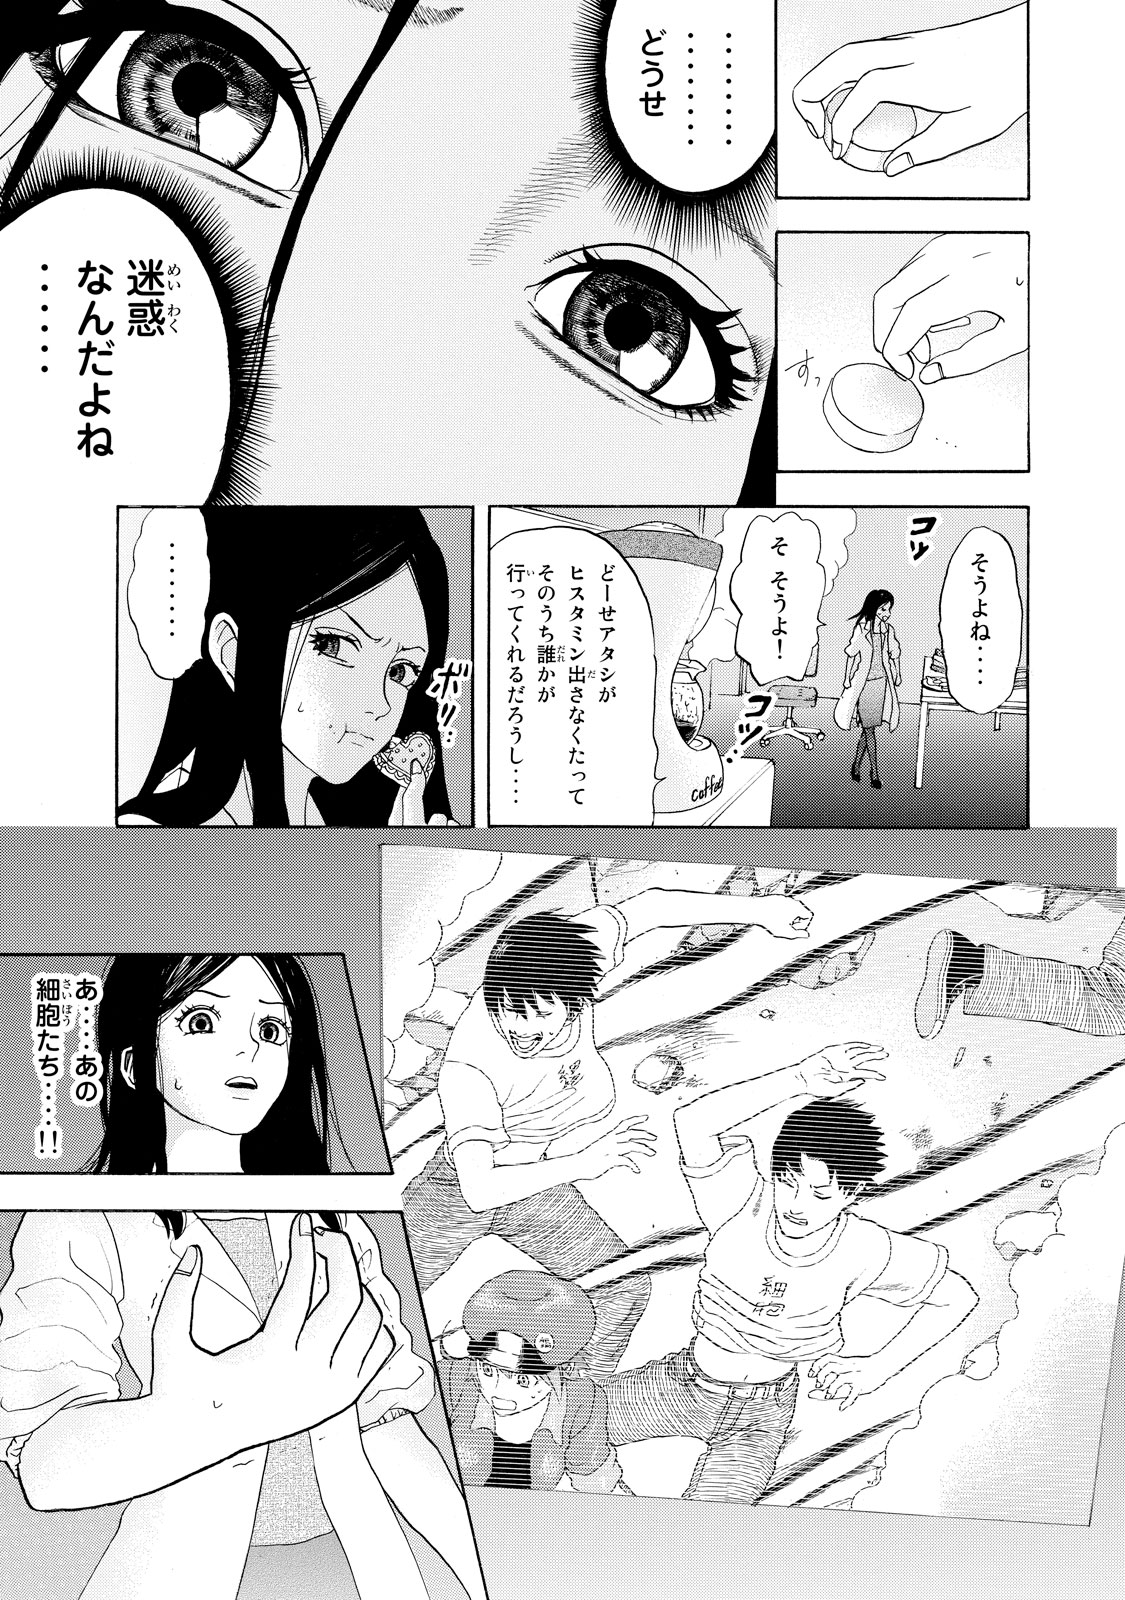 Hataraku Saibou - Chapter 16 - Page 19